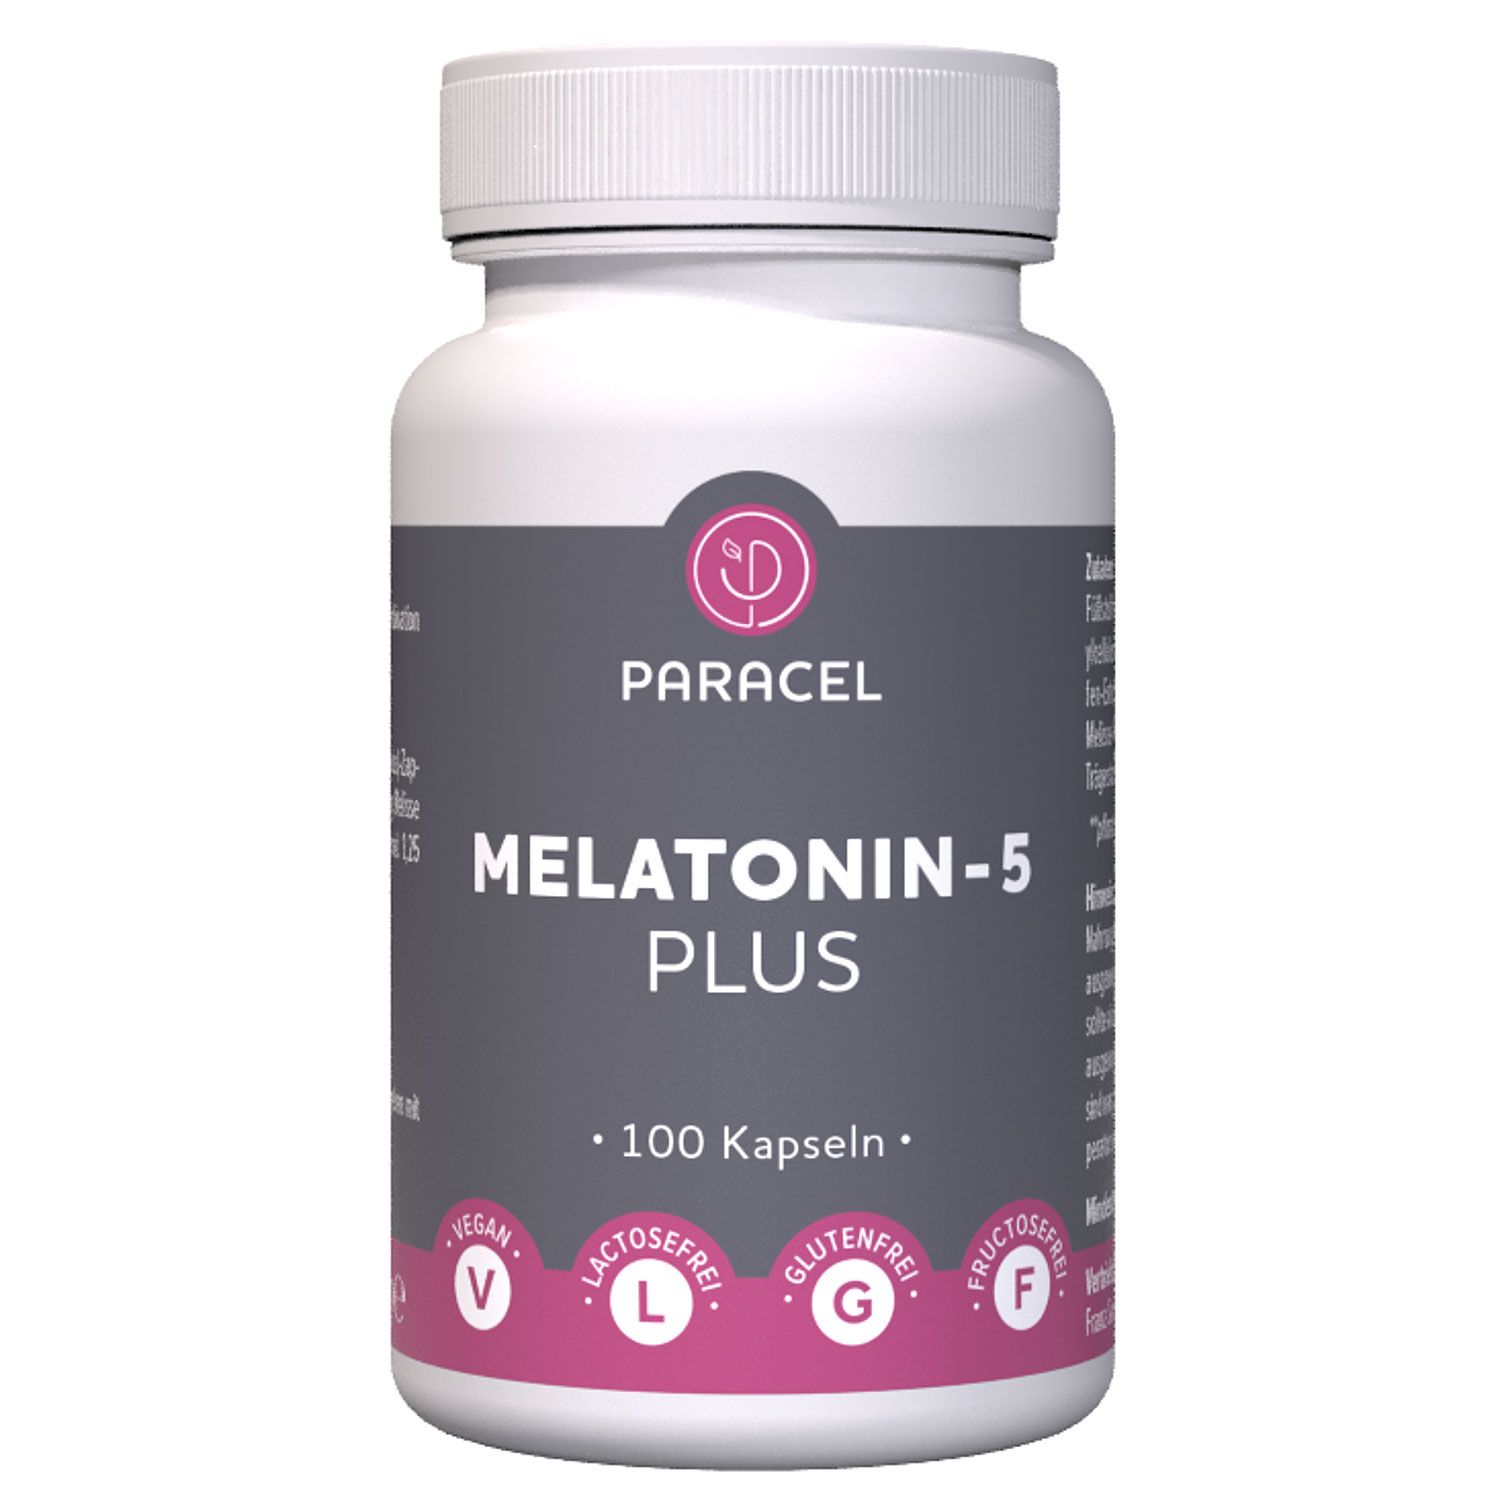 Paracel melatonin 5-plus capsules